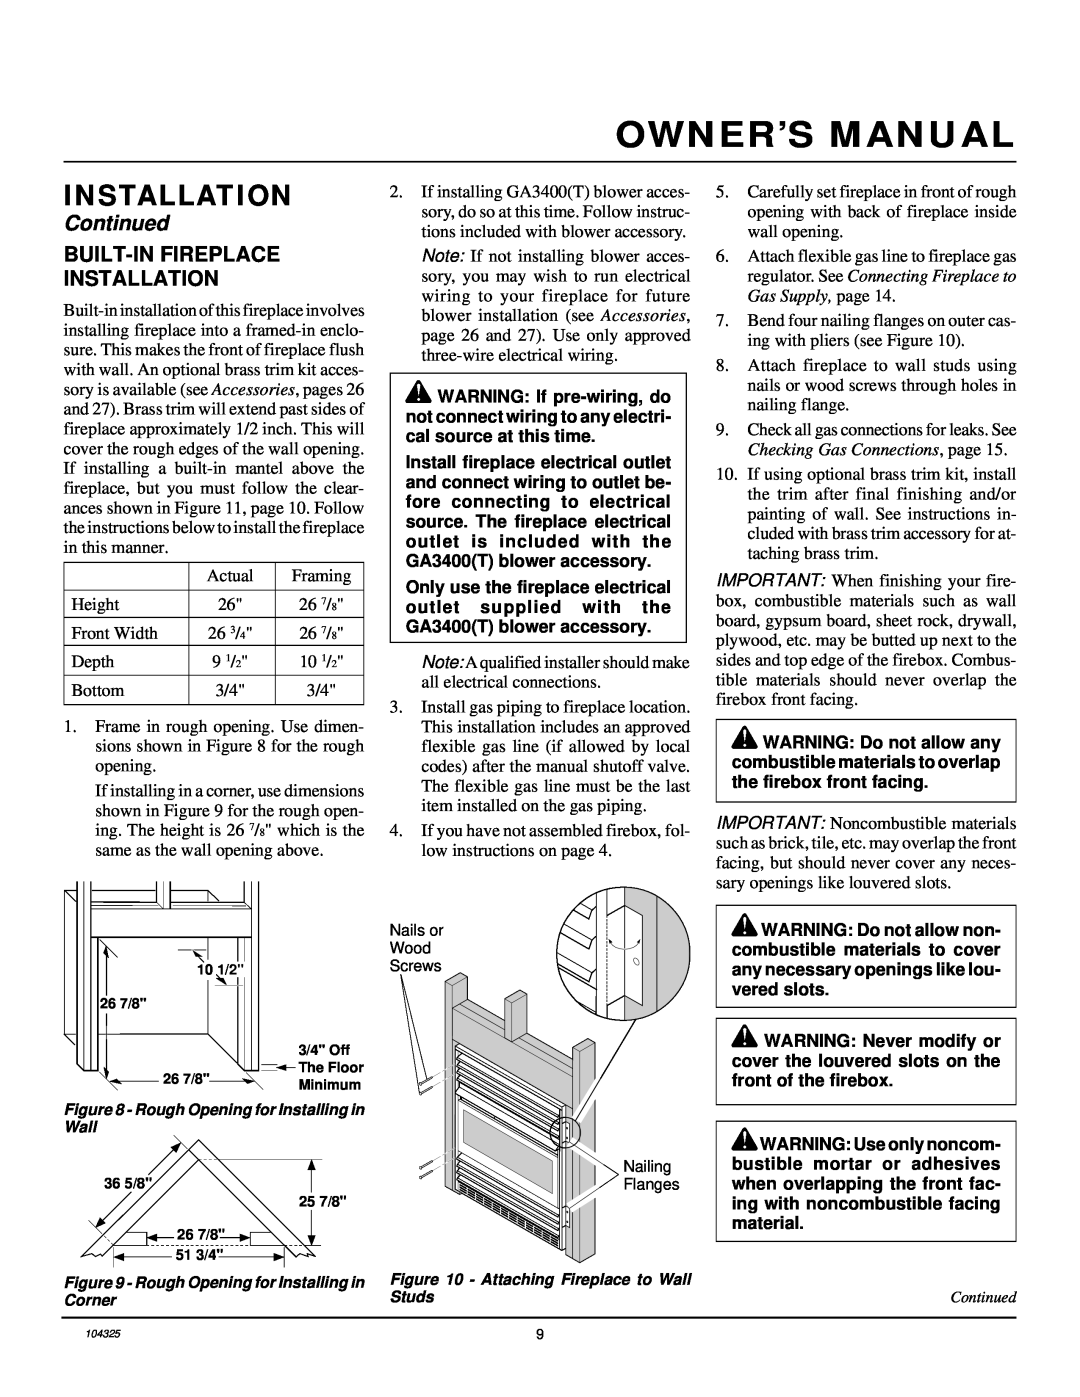 Vanguard Heating VMH26NR installation manual Built-Infireplace Installation, Continued 